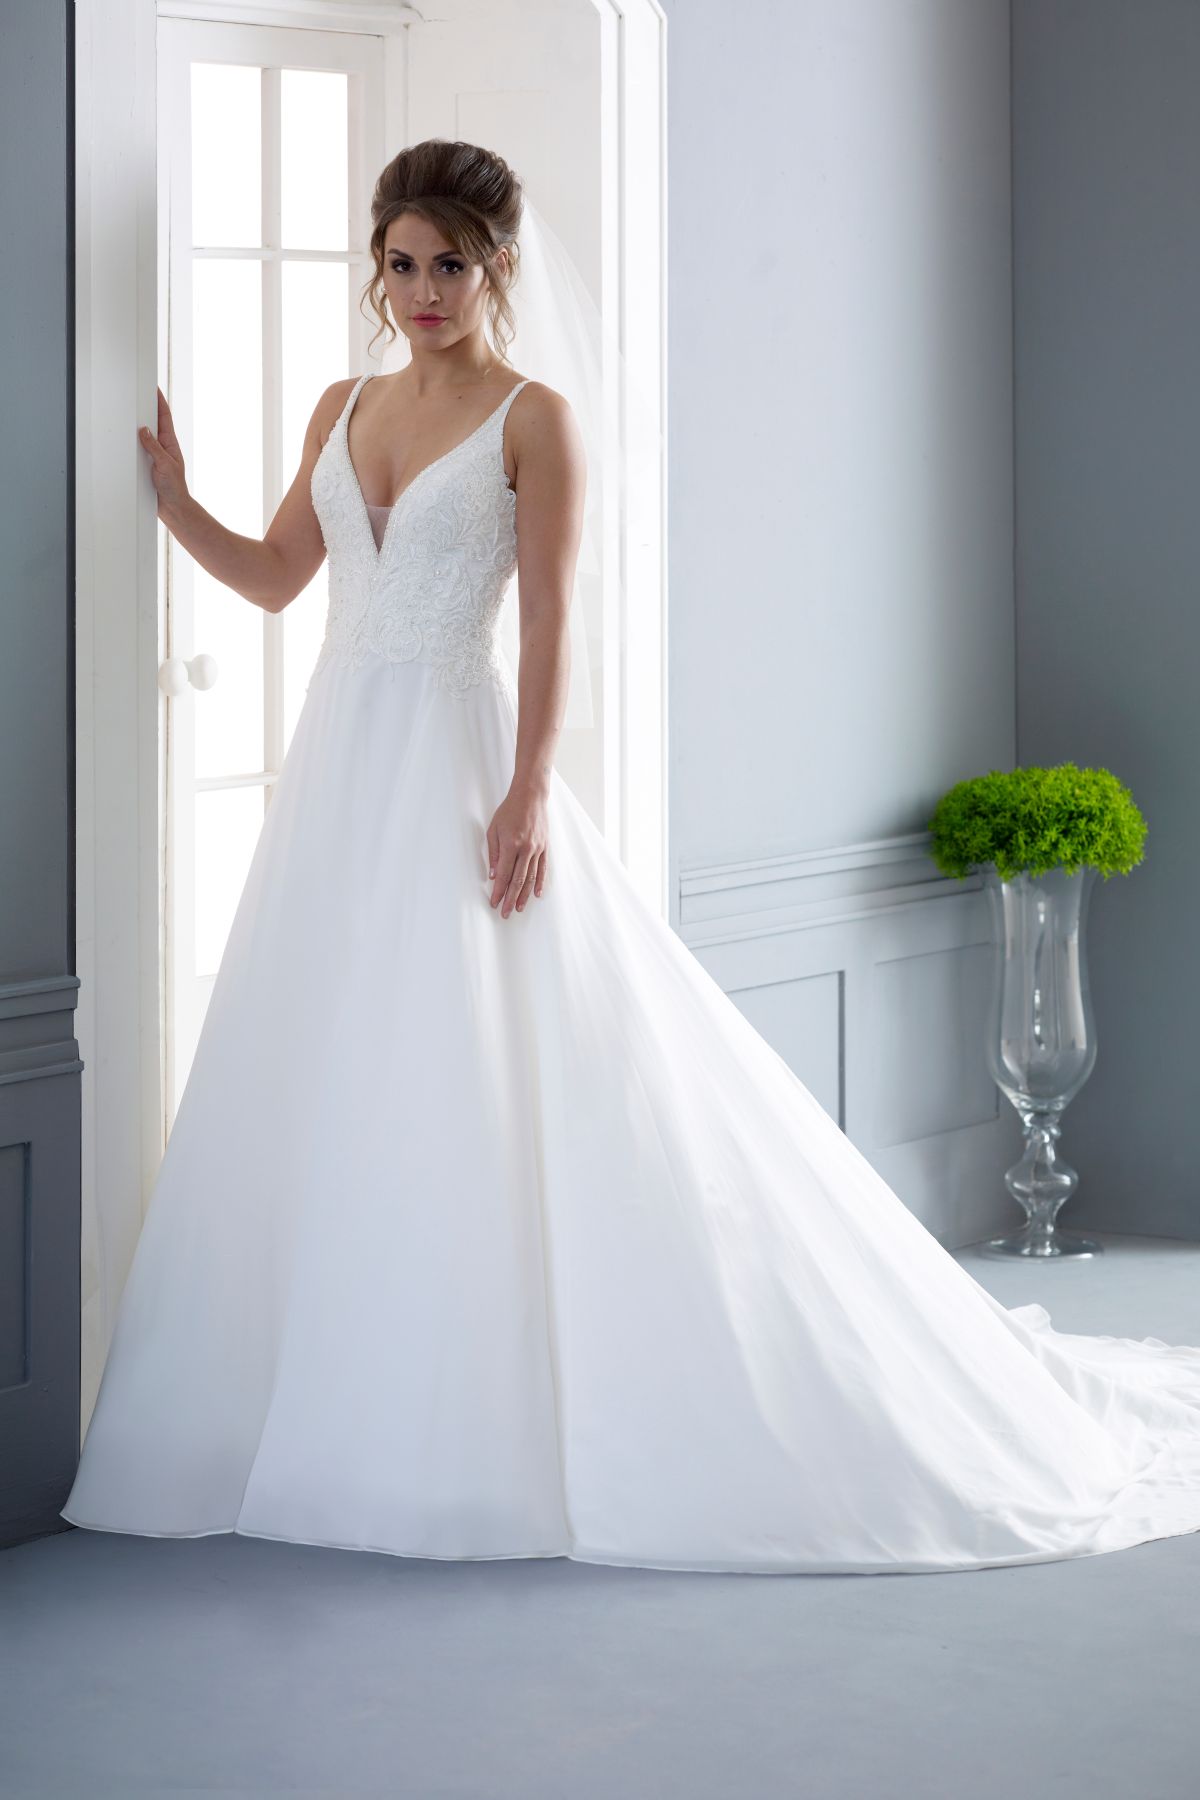 Best Dress 2 Impress Bridal-Image-102